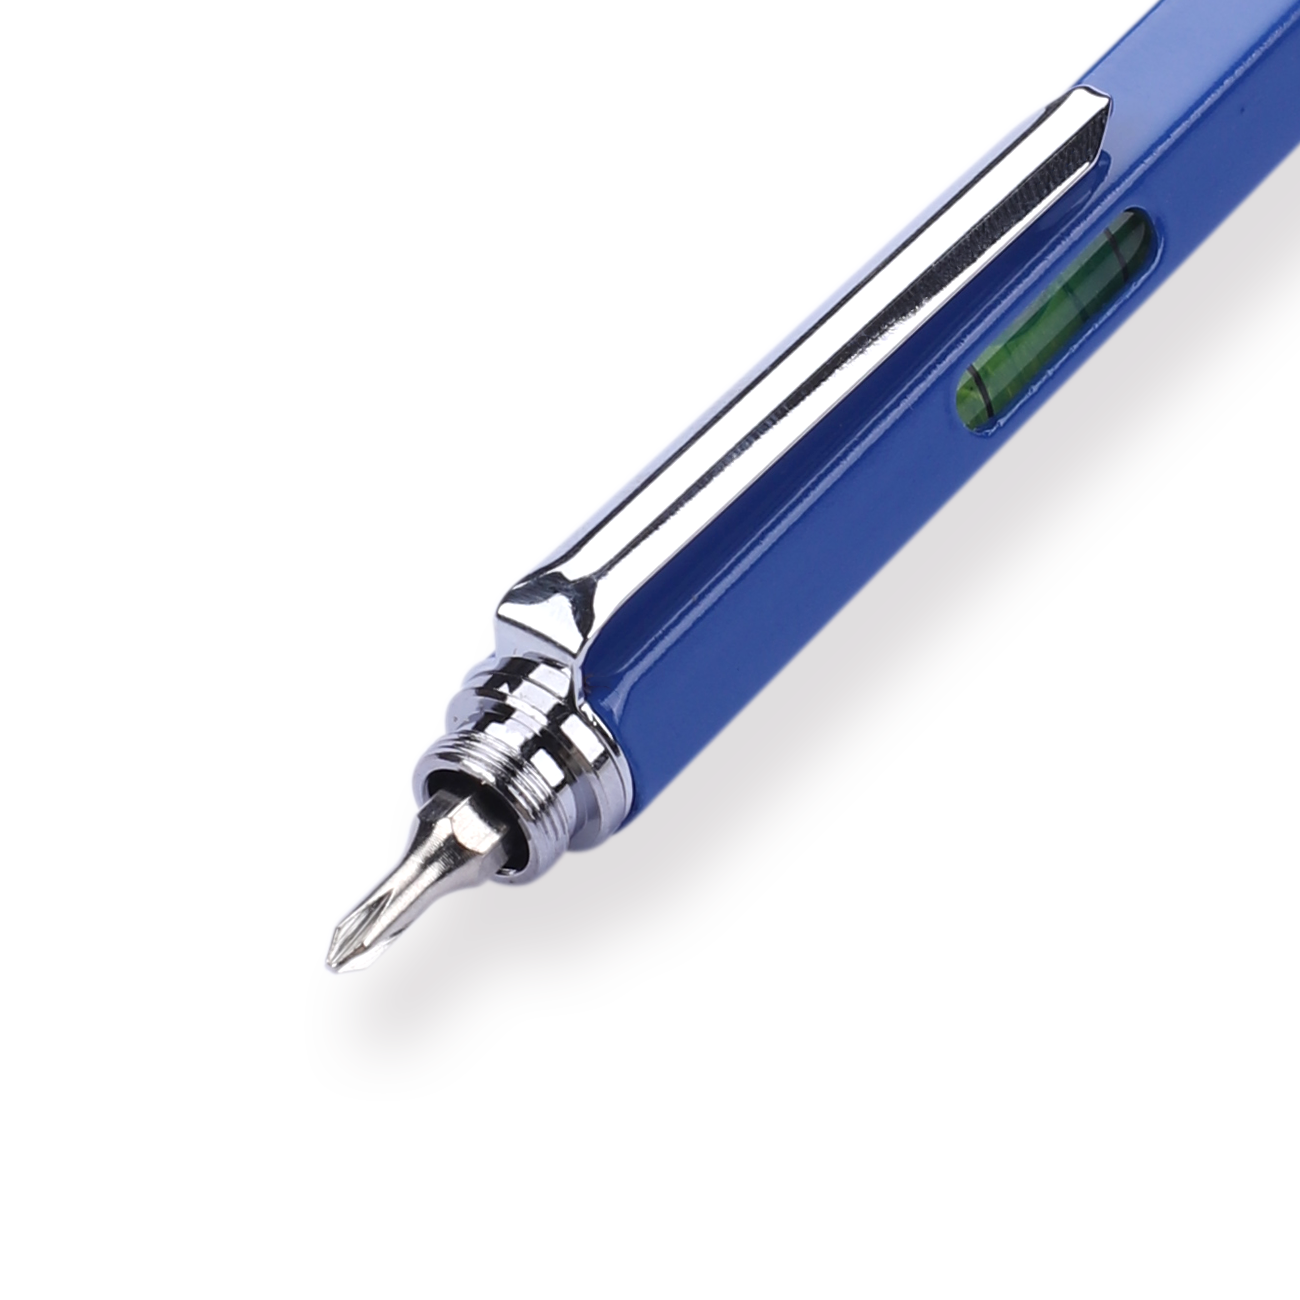 Multi-purpose Tool Pen - 0.5 mm - Blue Body - Stationery Pal